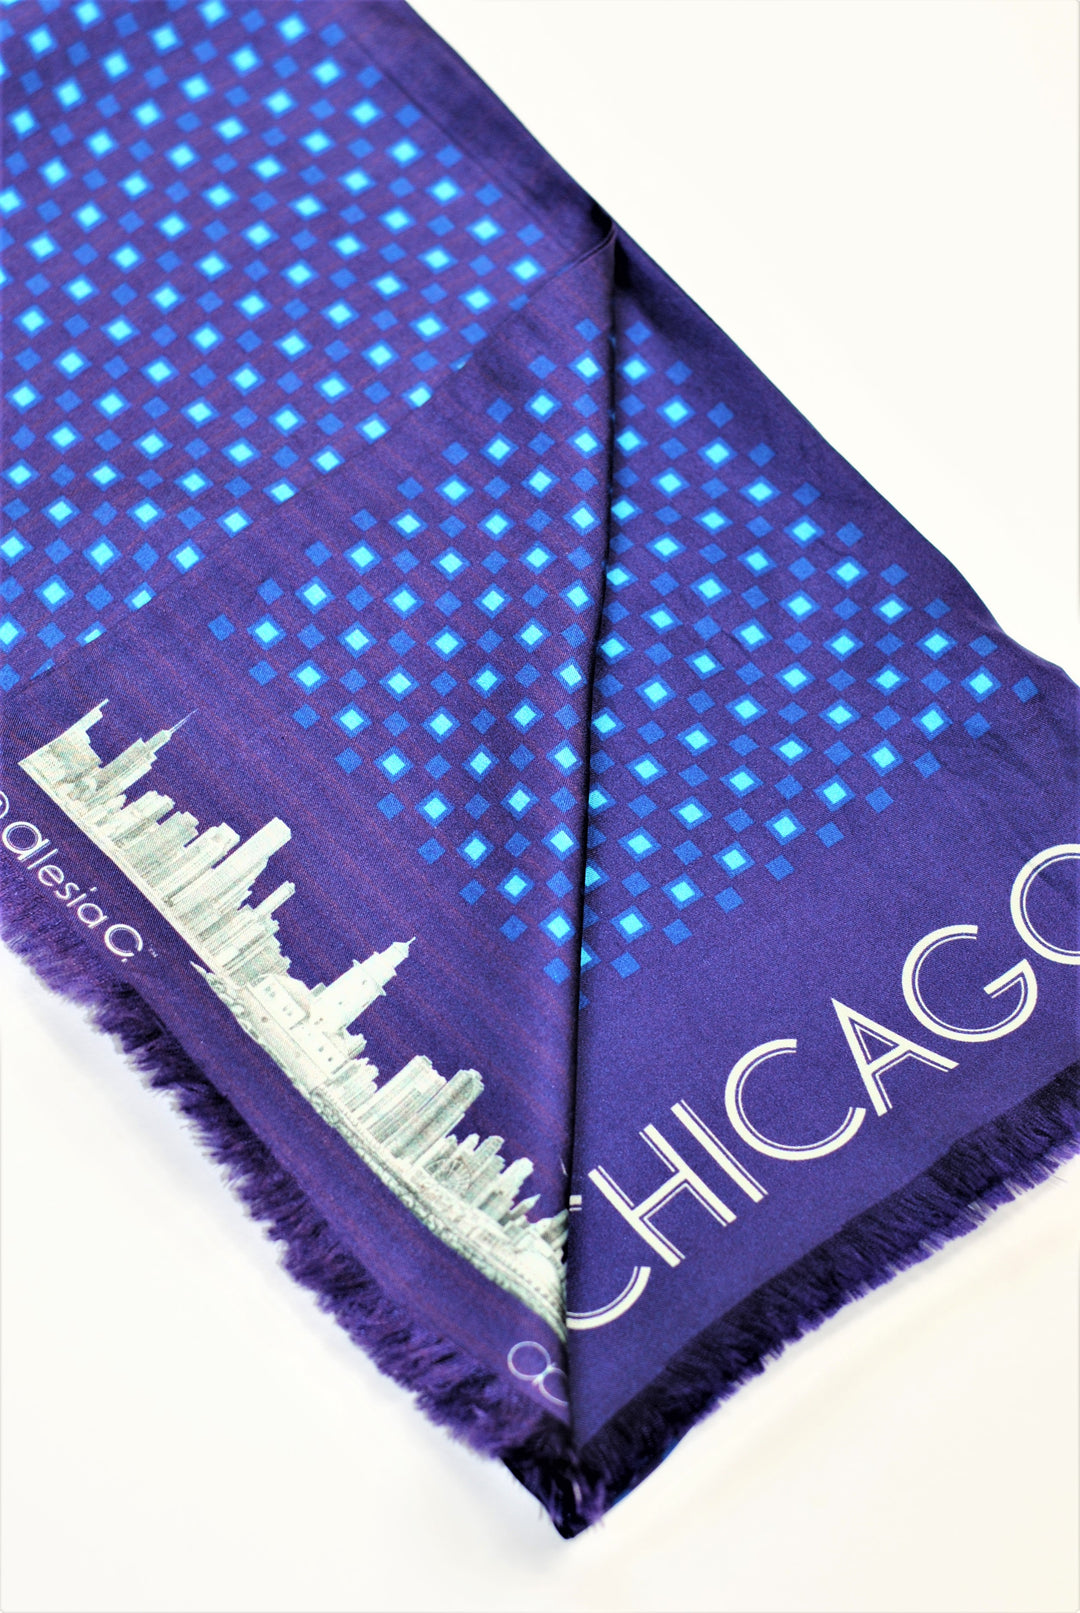 CHICAGO Skyline Art Long Pure Silk Scarf Royal Blue